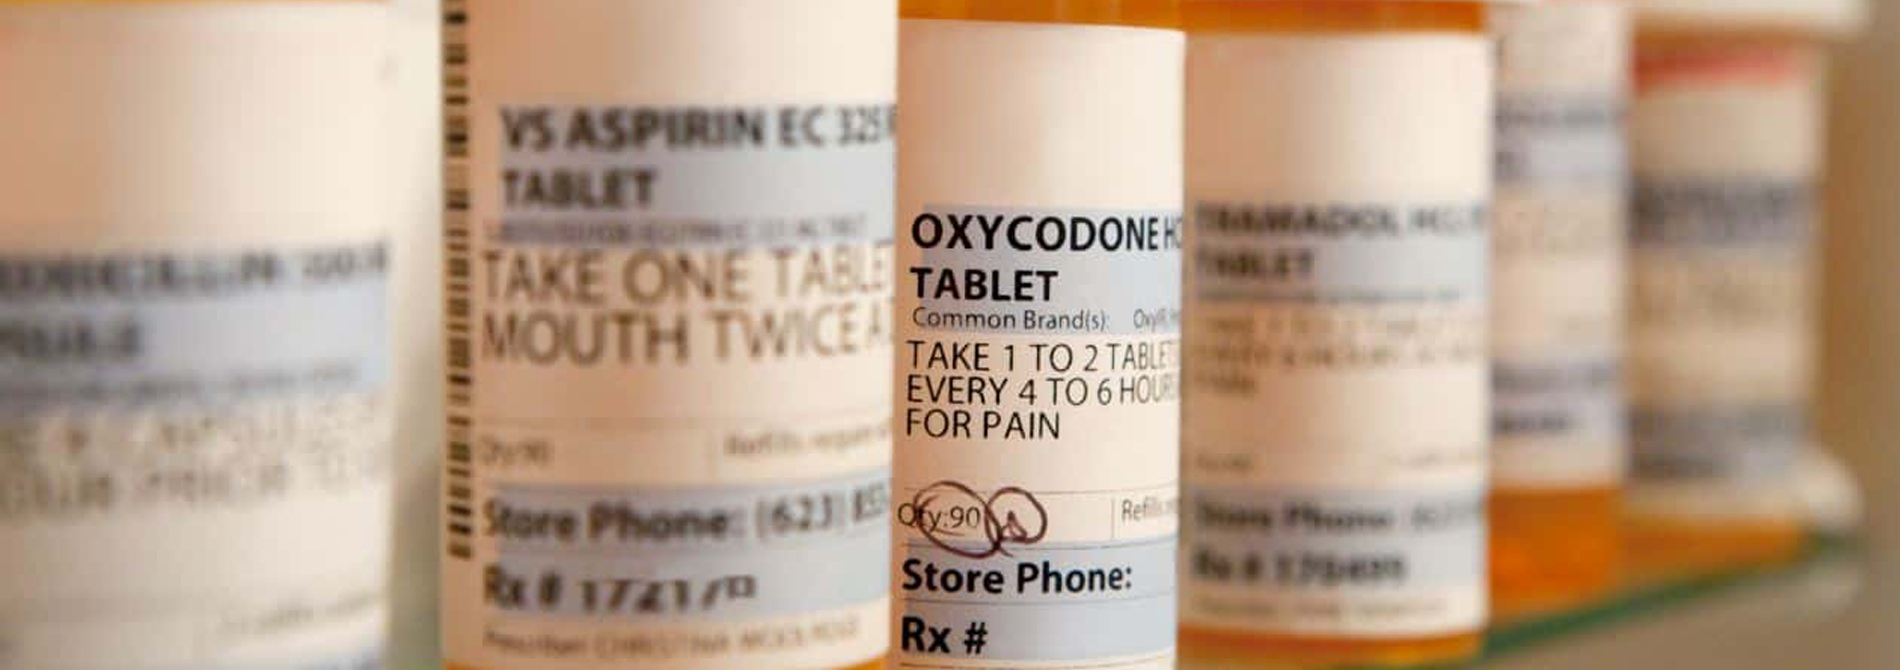 prescription pill bottles in medicine cabinet